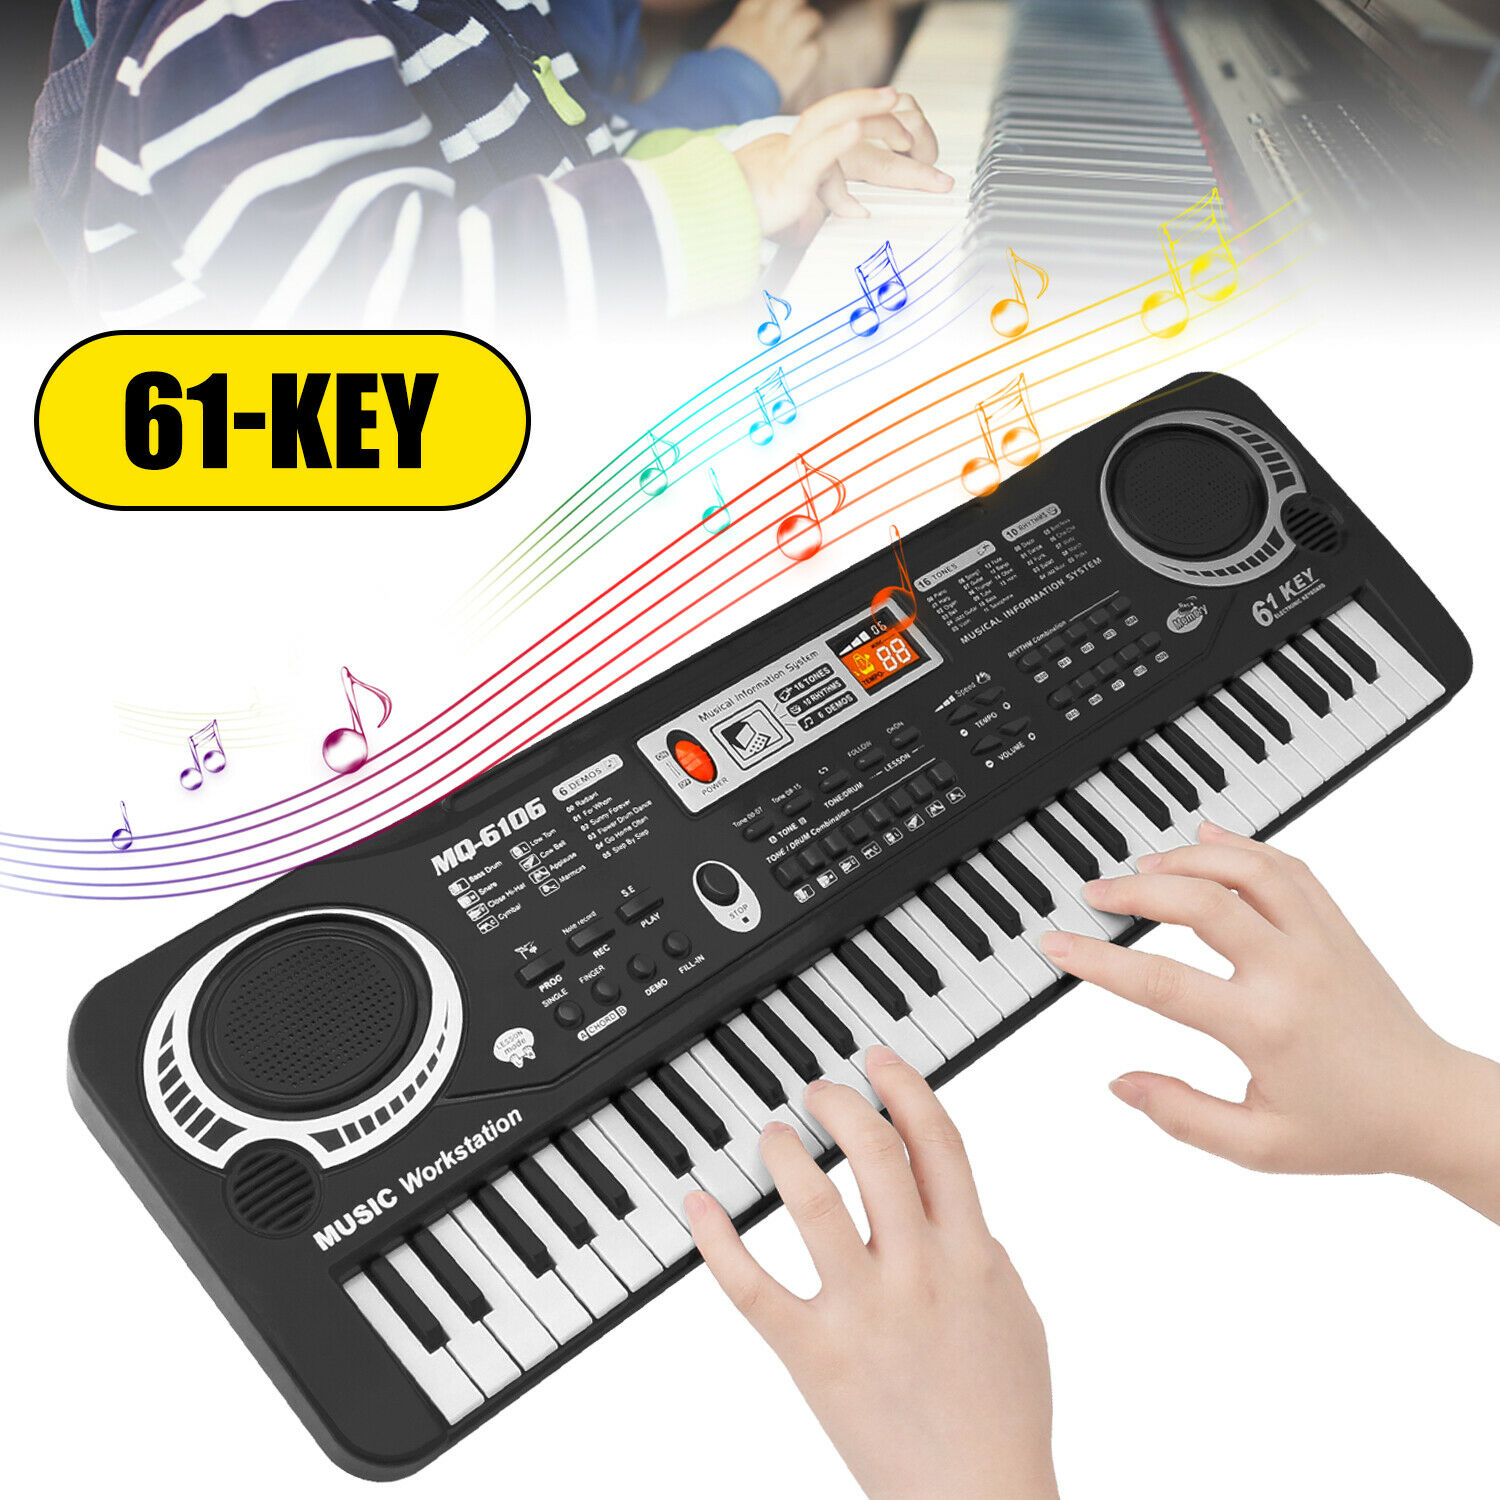 61 Key Music Piano Electronic Keyboard Kids Gift Musical Instrument Microphone